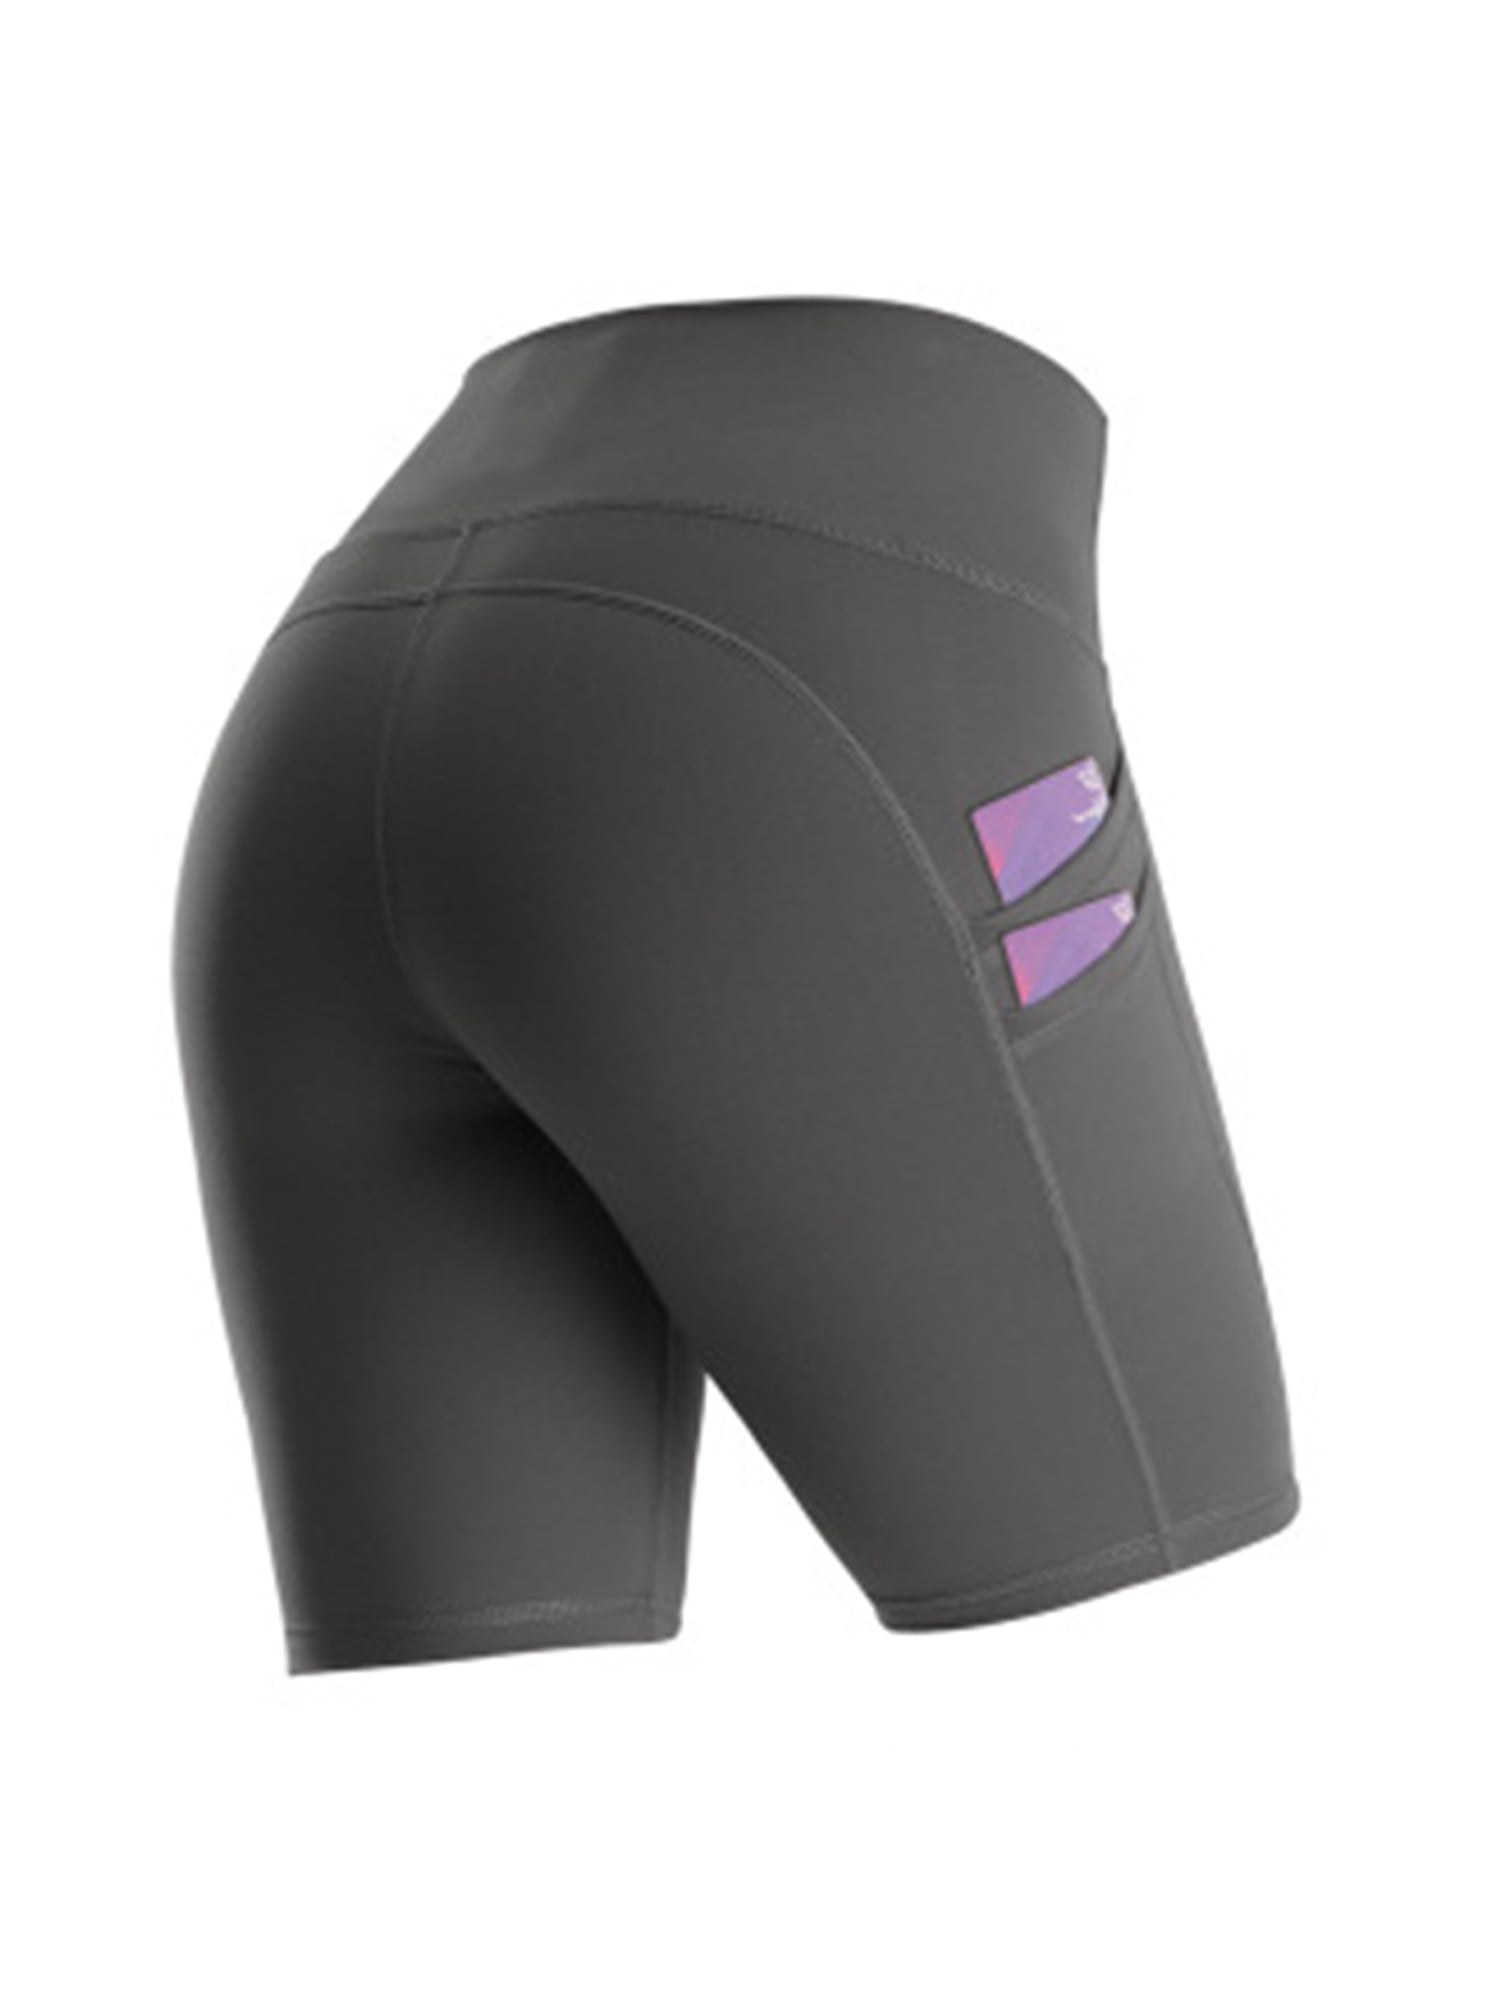 HARTPOR Womens 5 Workout Biker Shorts High Waist Tummy Control Yoga Trainning Exercise Shorts with Pockets